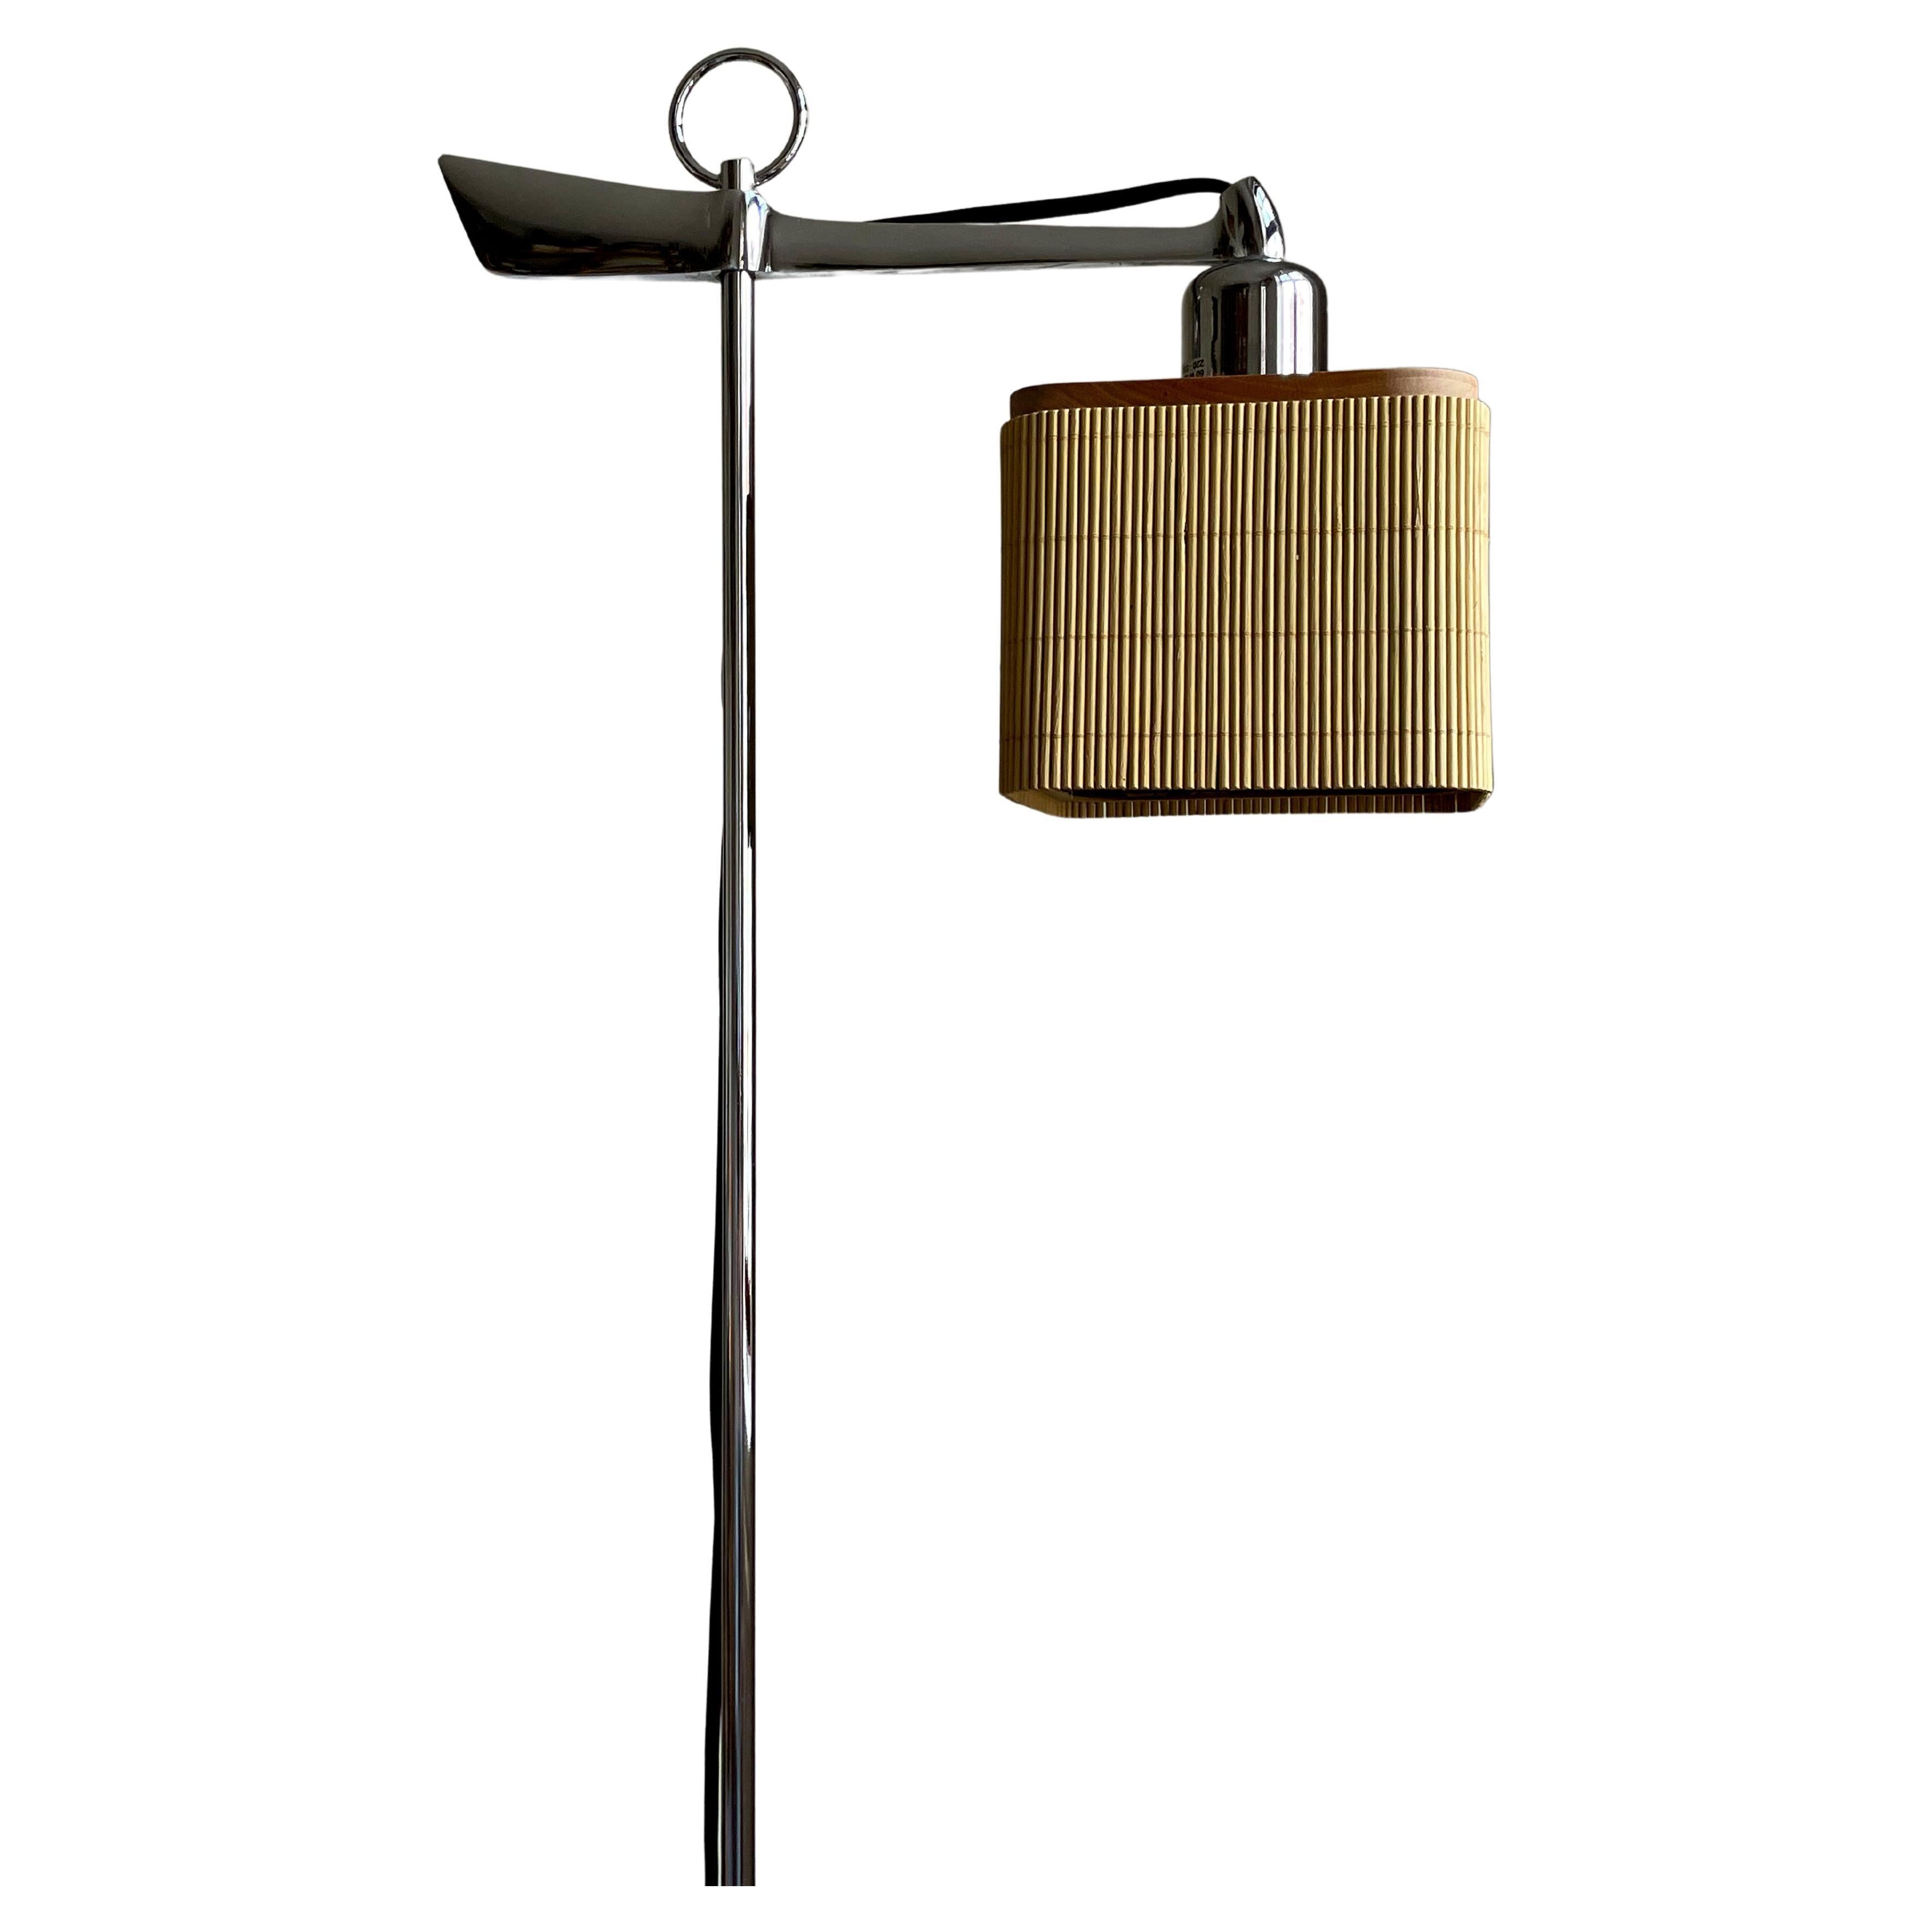 Adjustable Spanish Modernist Floor Lamp, Chrome, Wood, Rattan, 2010s For Sale